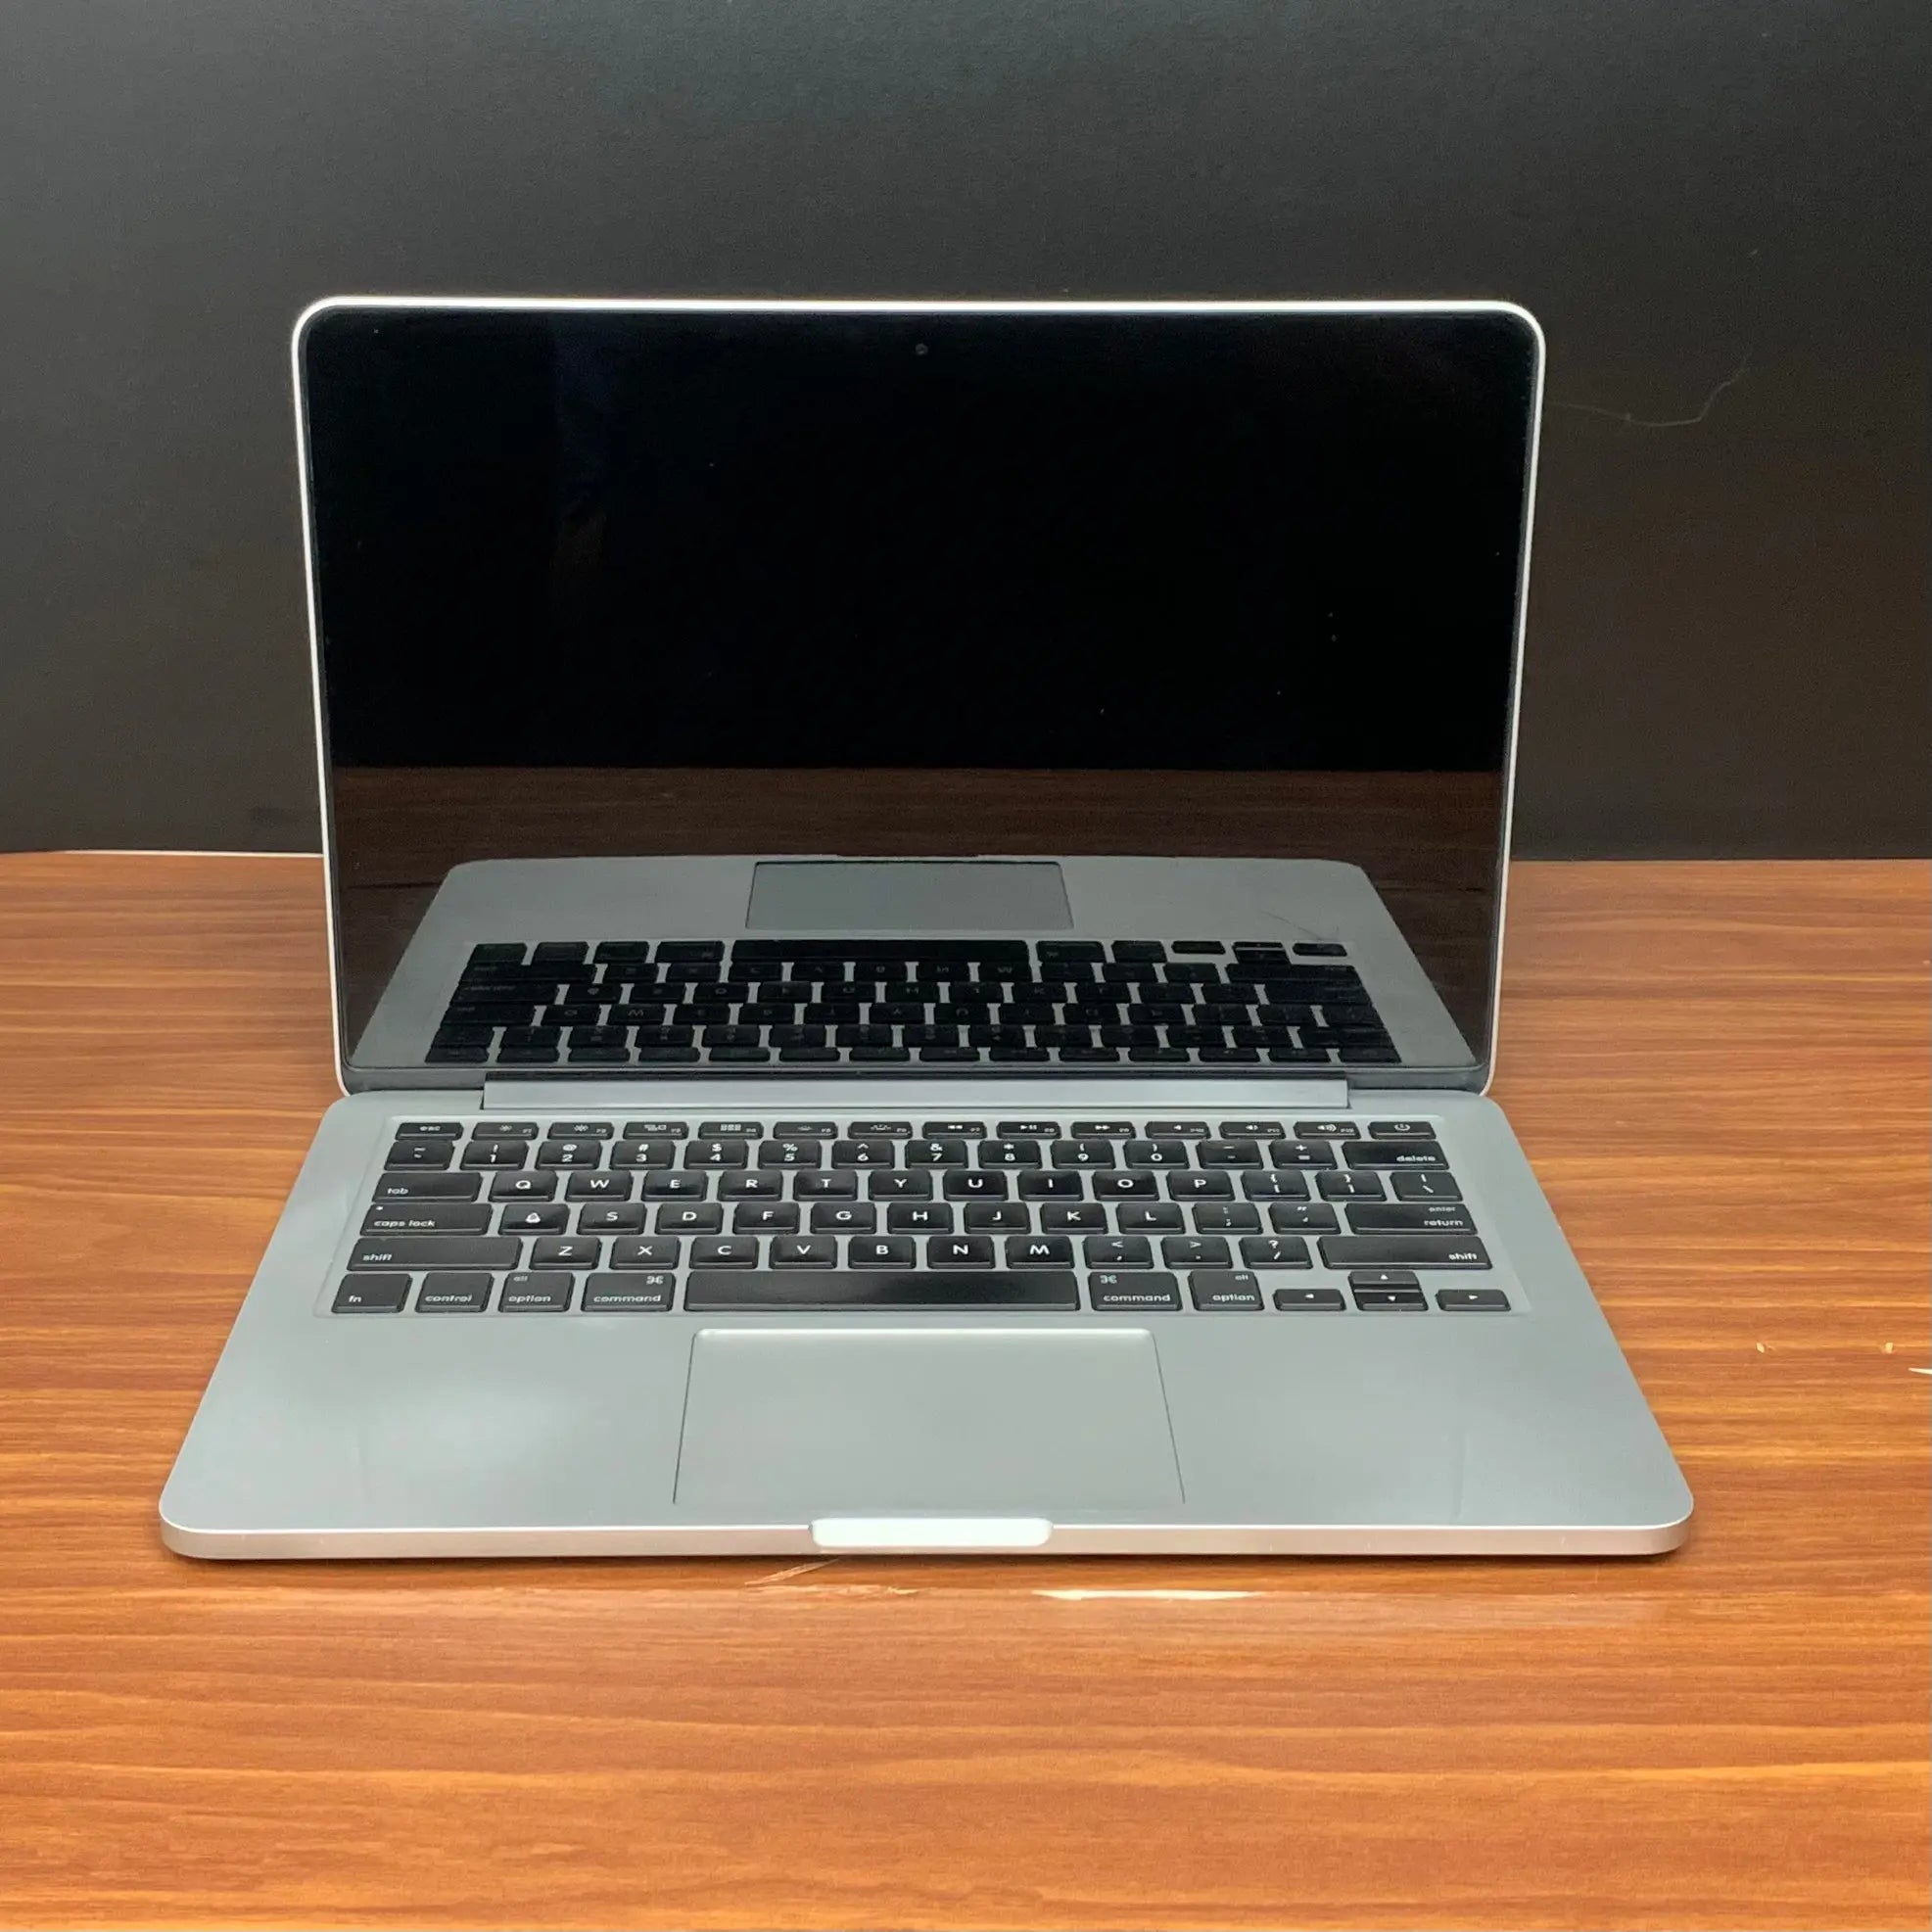 Comprar MacBook Pro usado - Macbook Pro 13 Late I5 2.6GHz 2014 MGX72LL/A - TrocaTech Seminovos